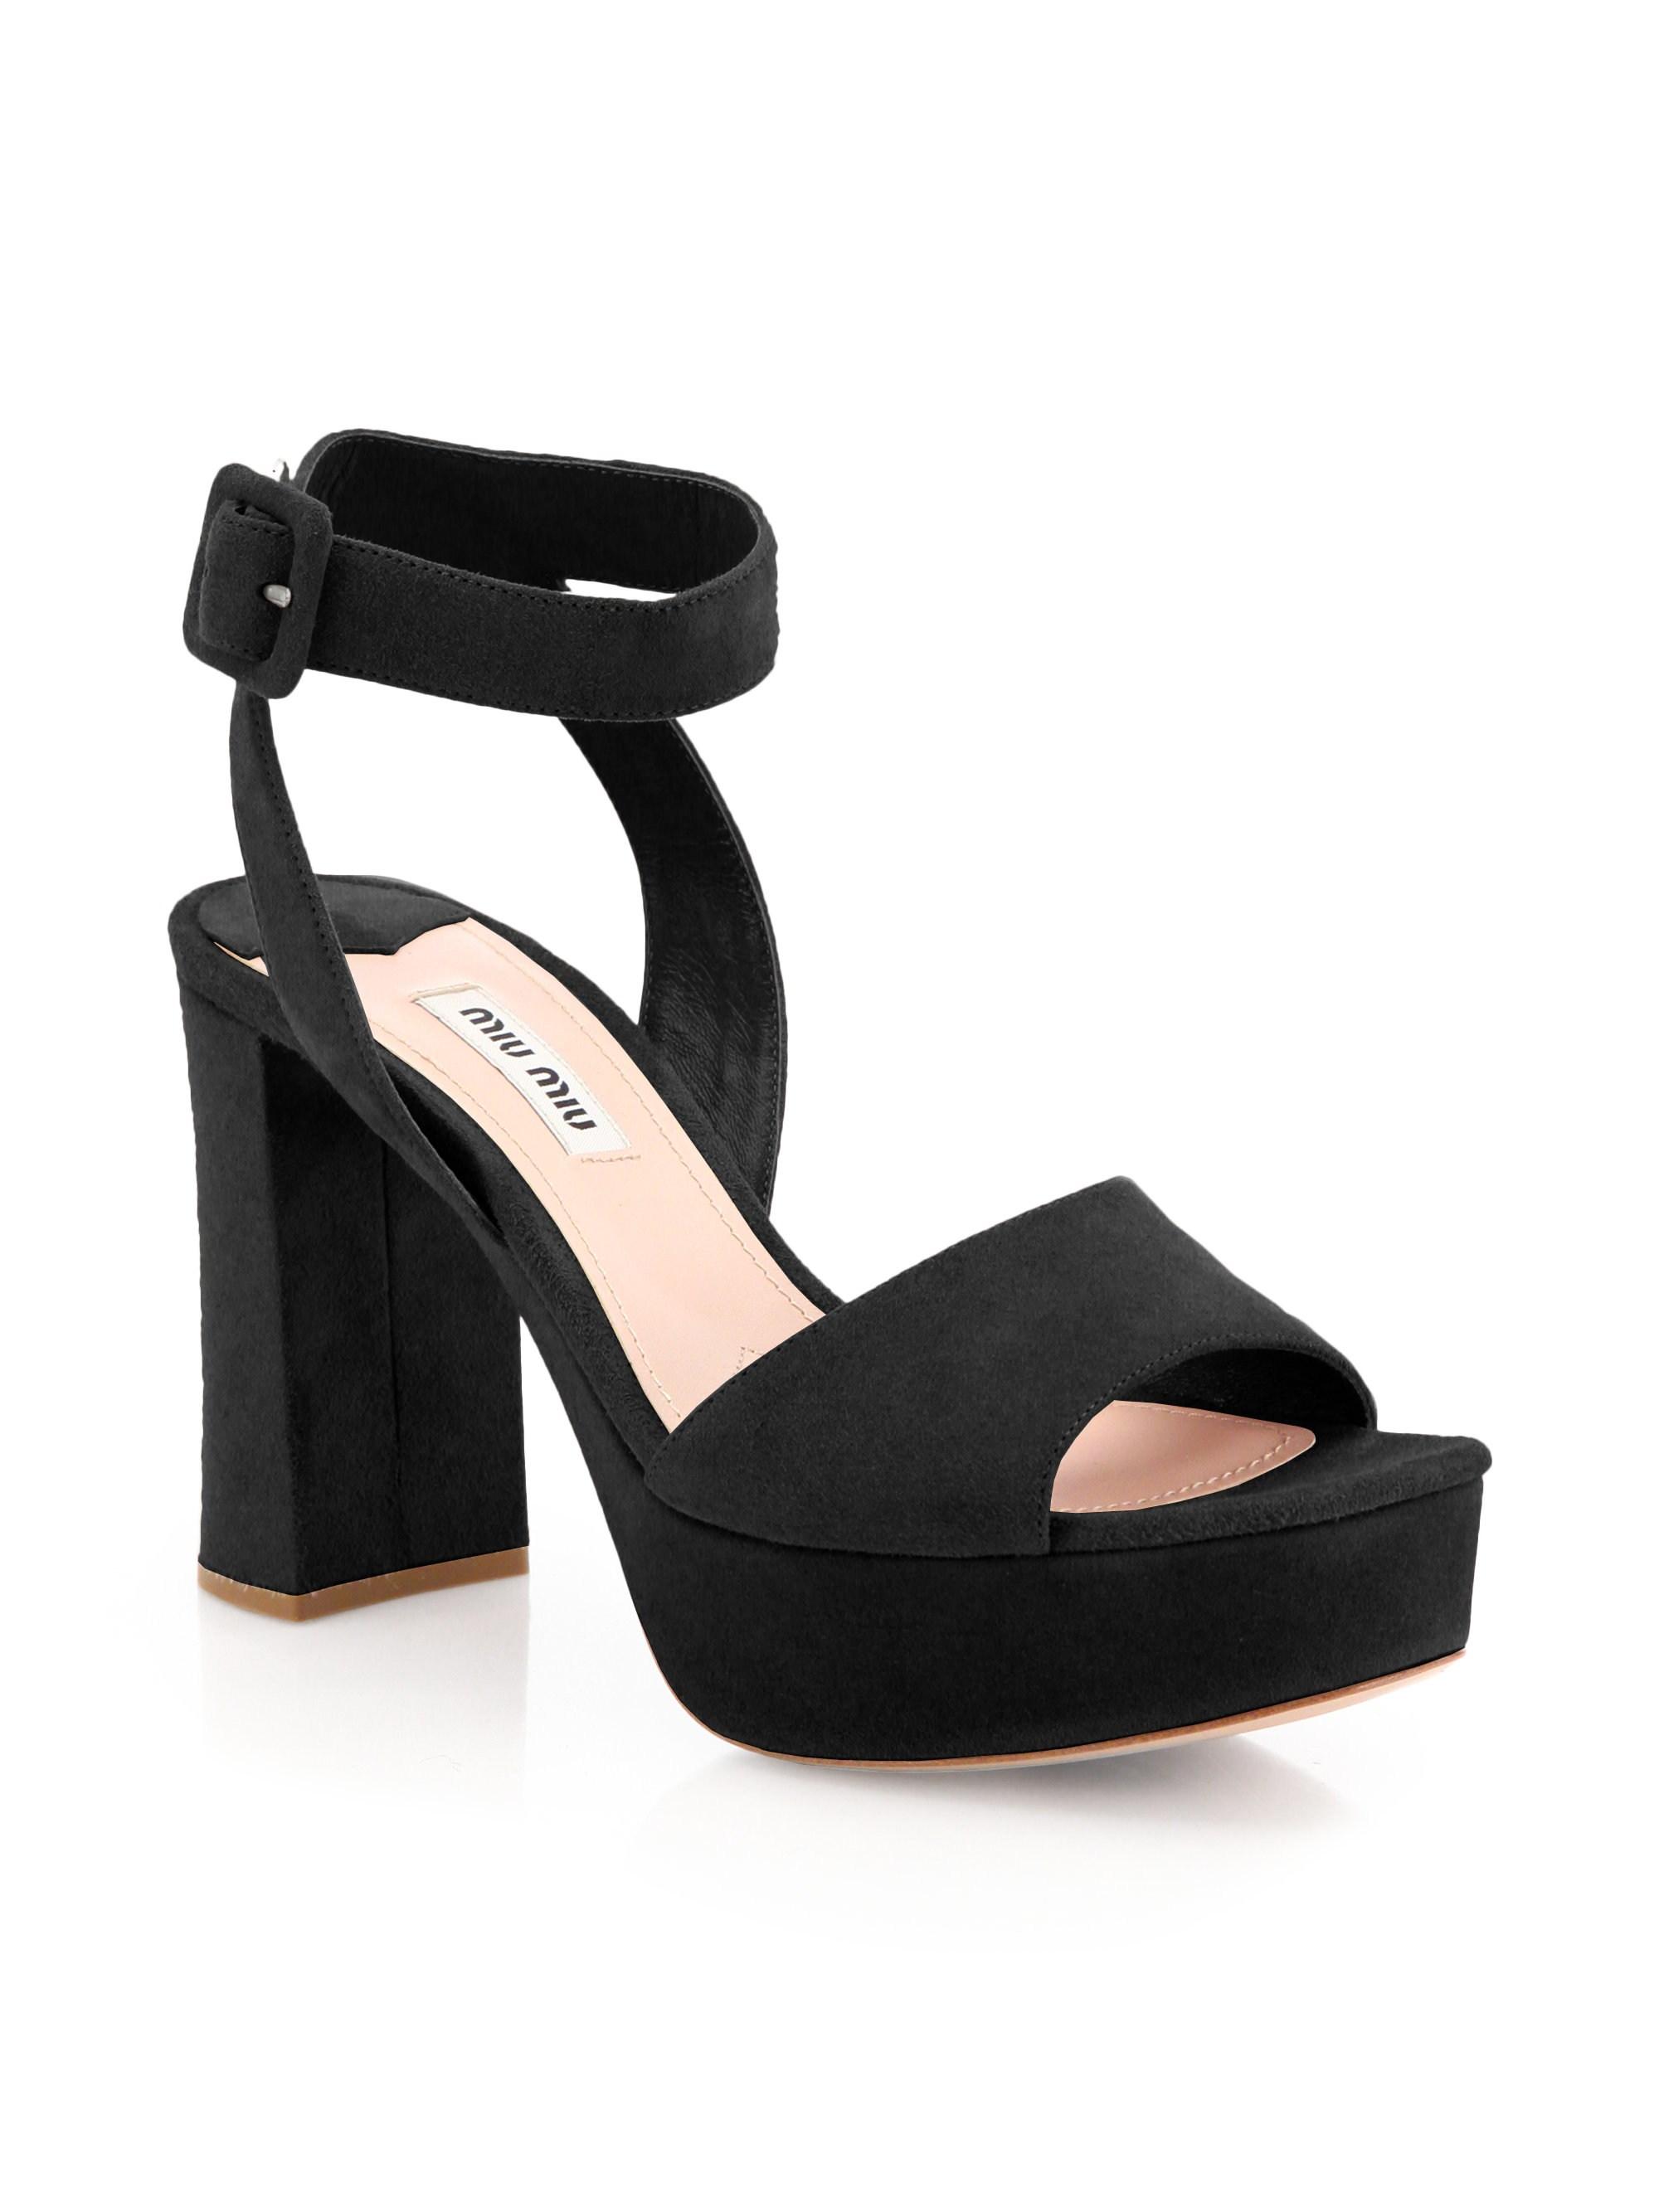 Miu Miu Suede Ankle-strap Platform Sandals in Black | Lyst